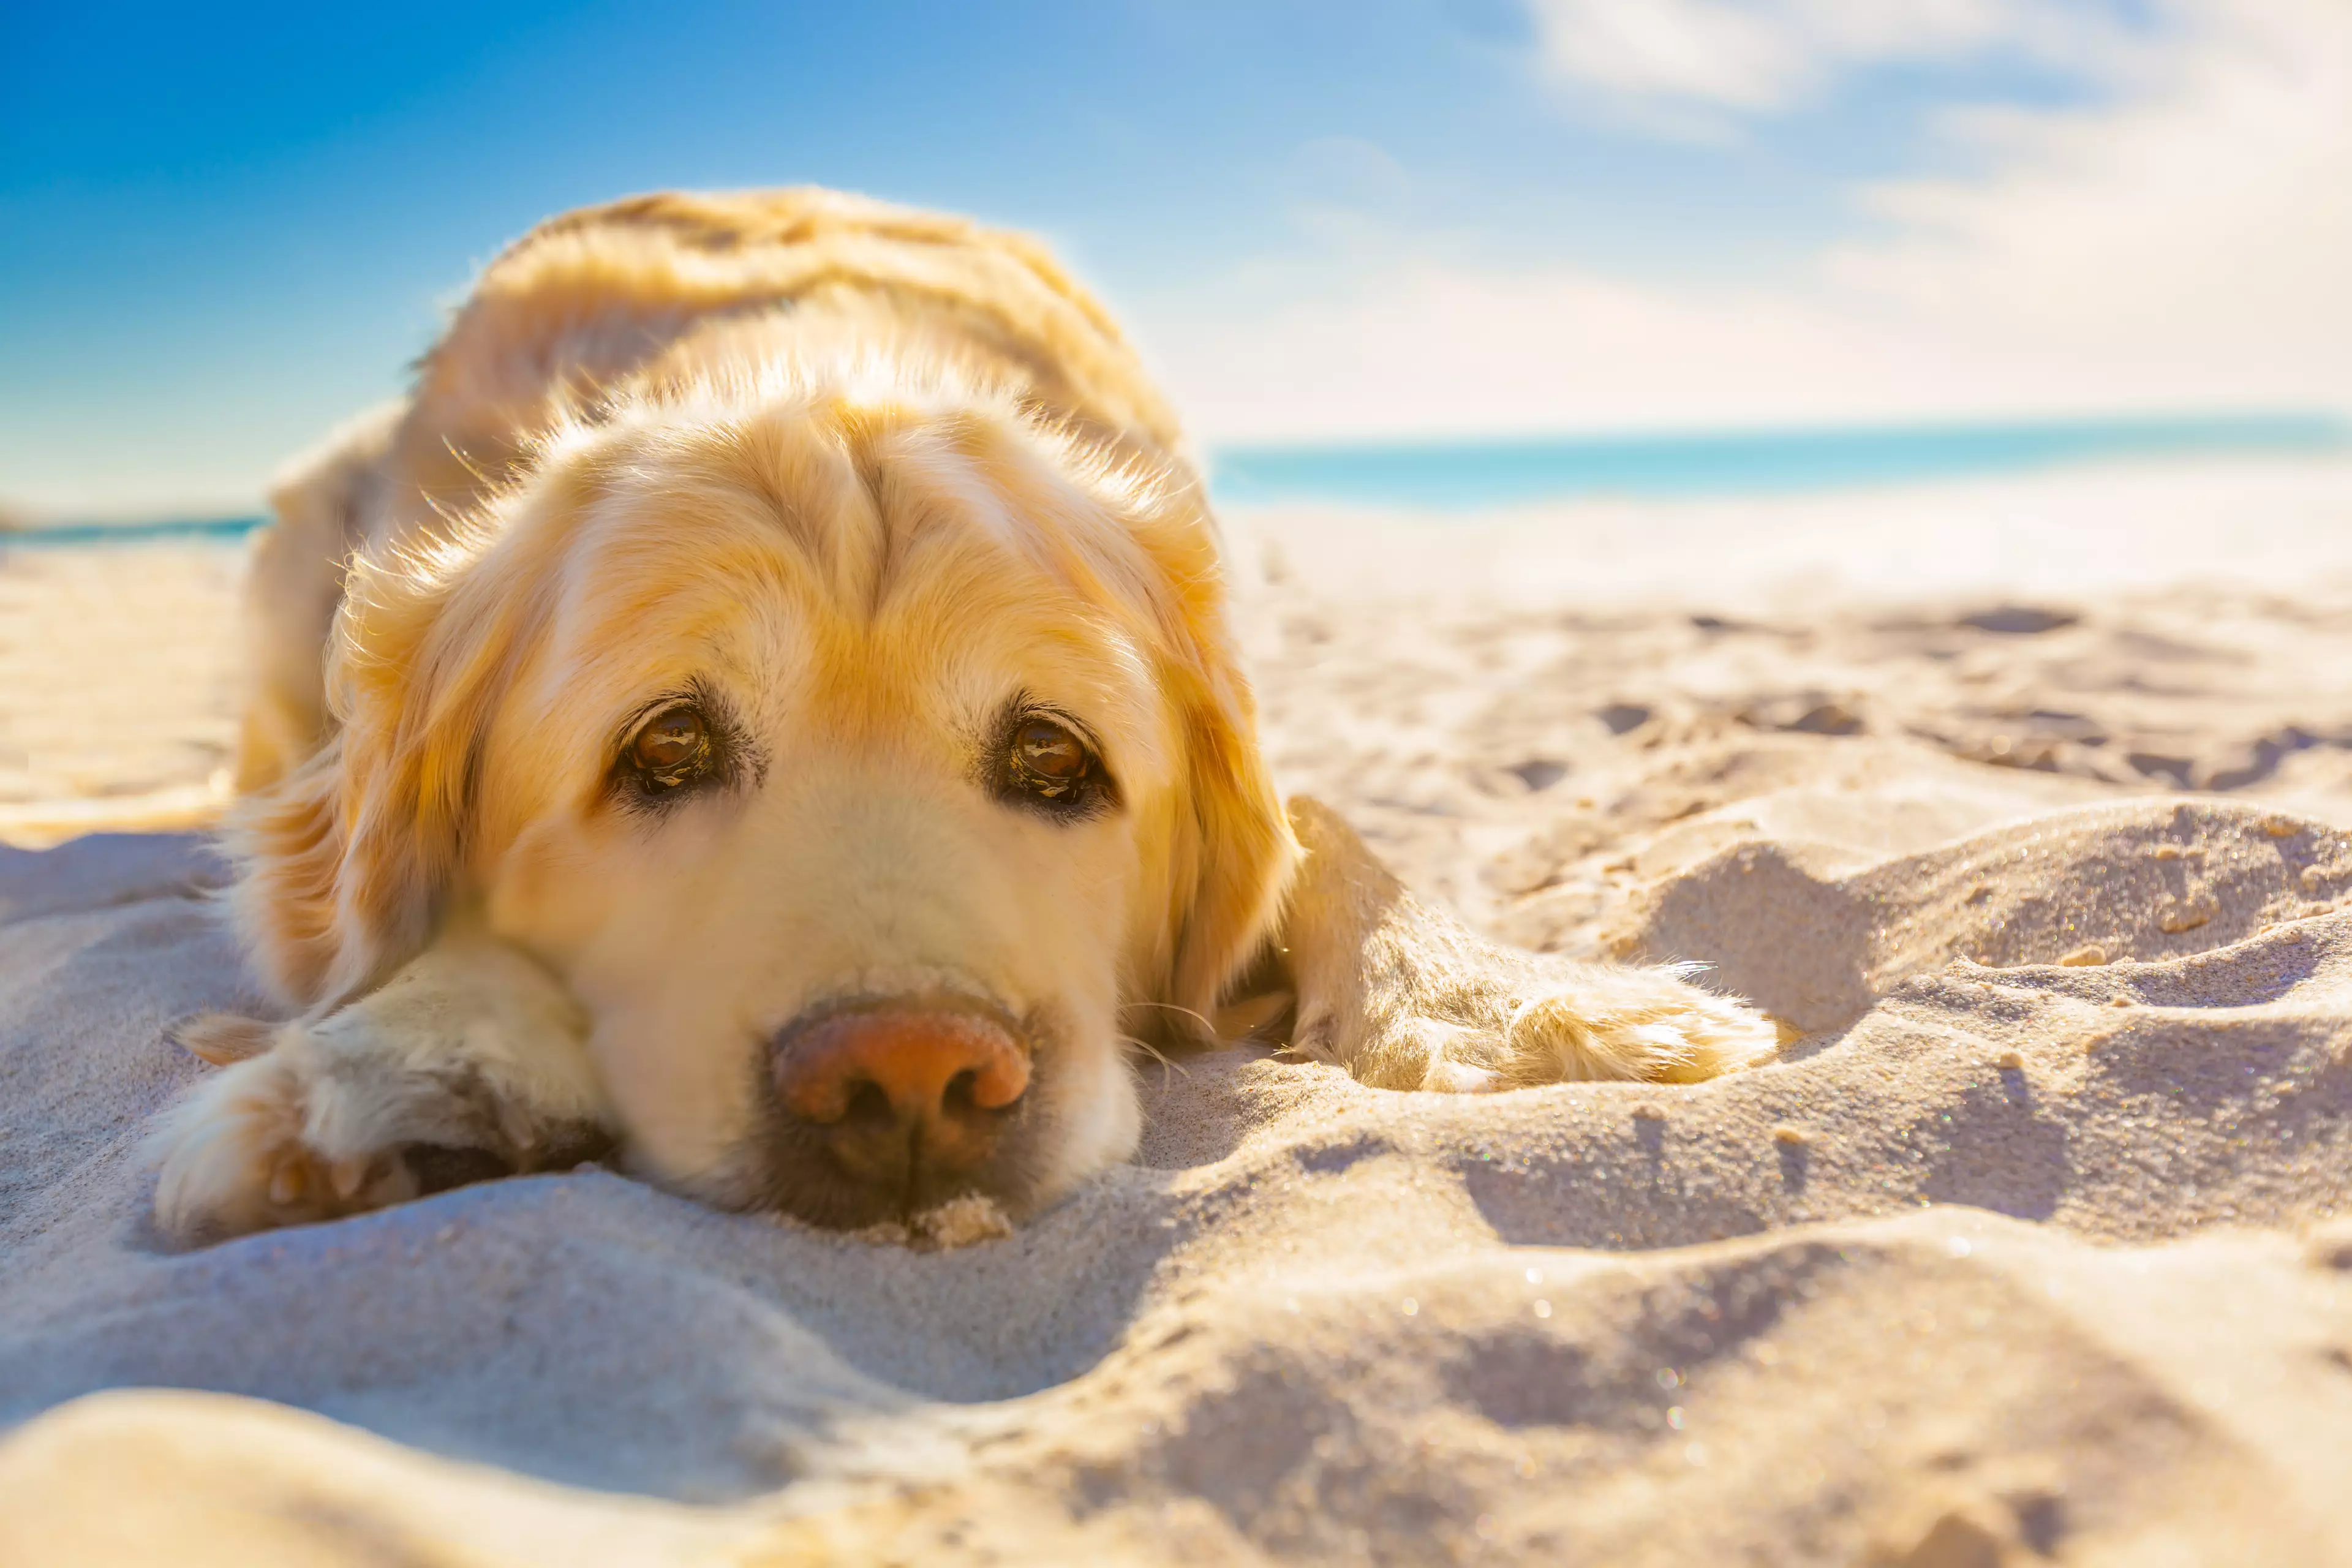 Dogs can suffer sunburn too (